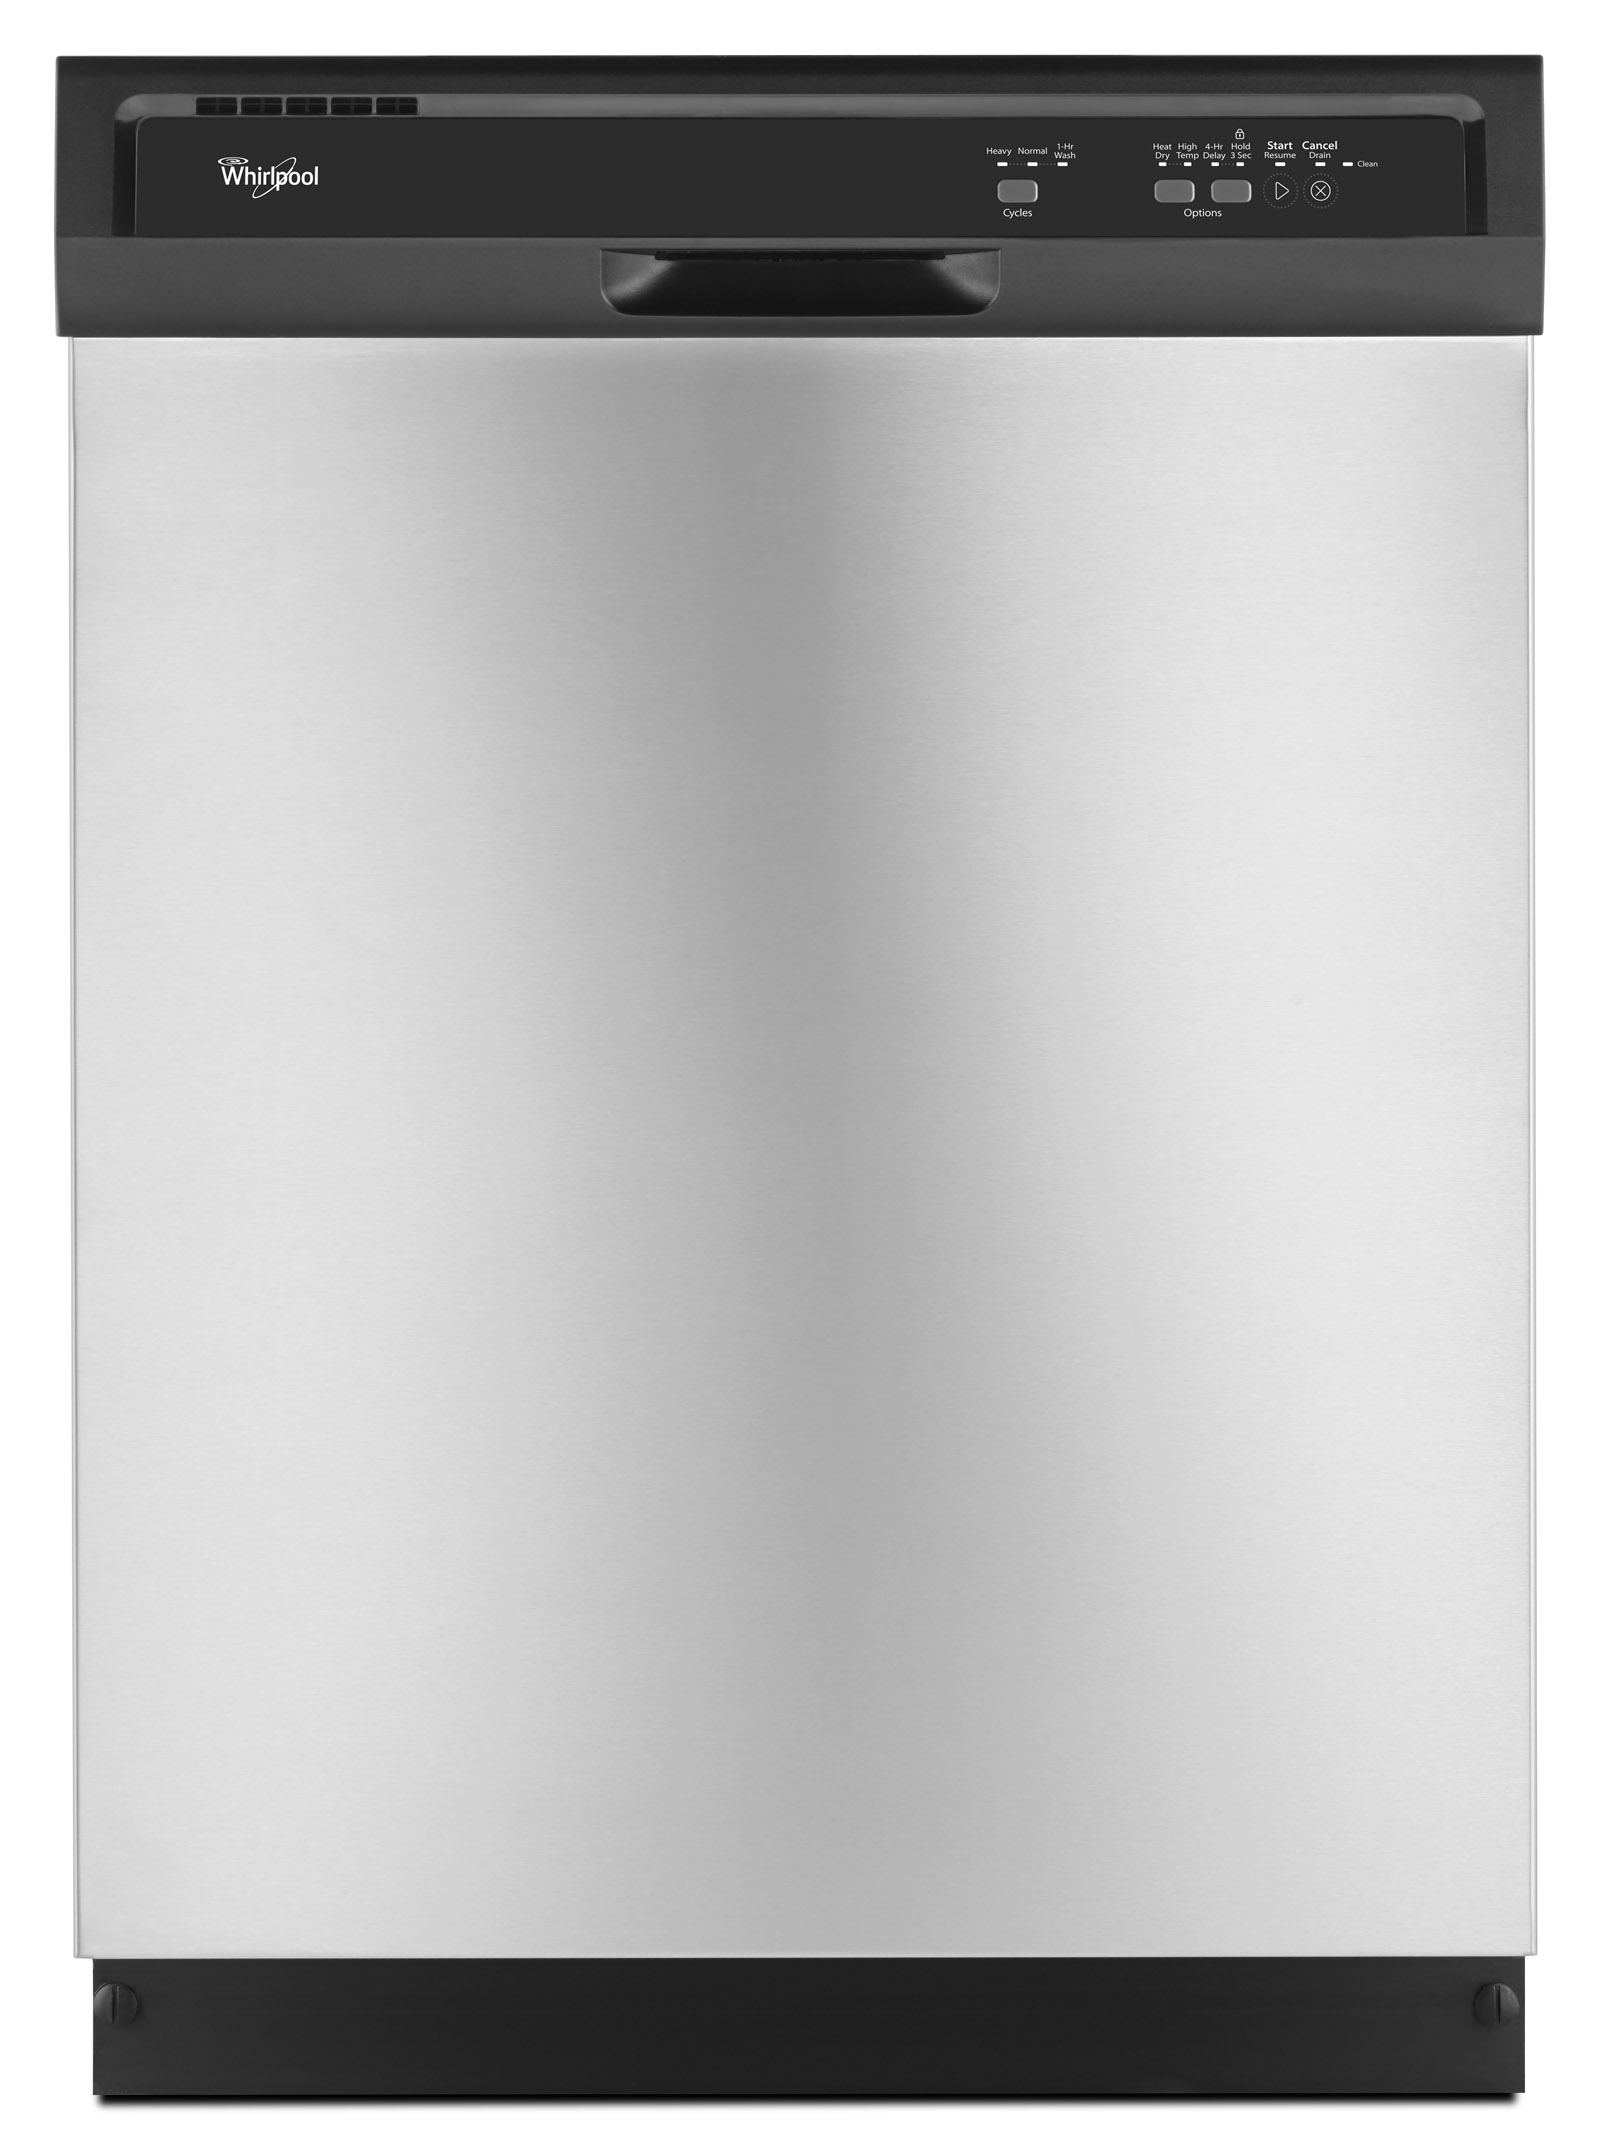 Whirlpool Dishwasher w\/ AccuSense Soil Sensor - Stainless Steel - WDF320PADD